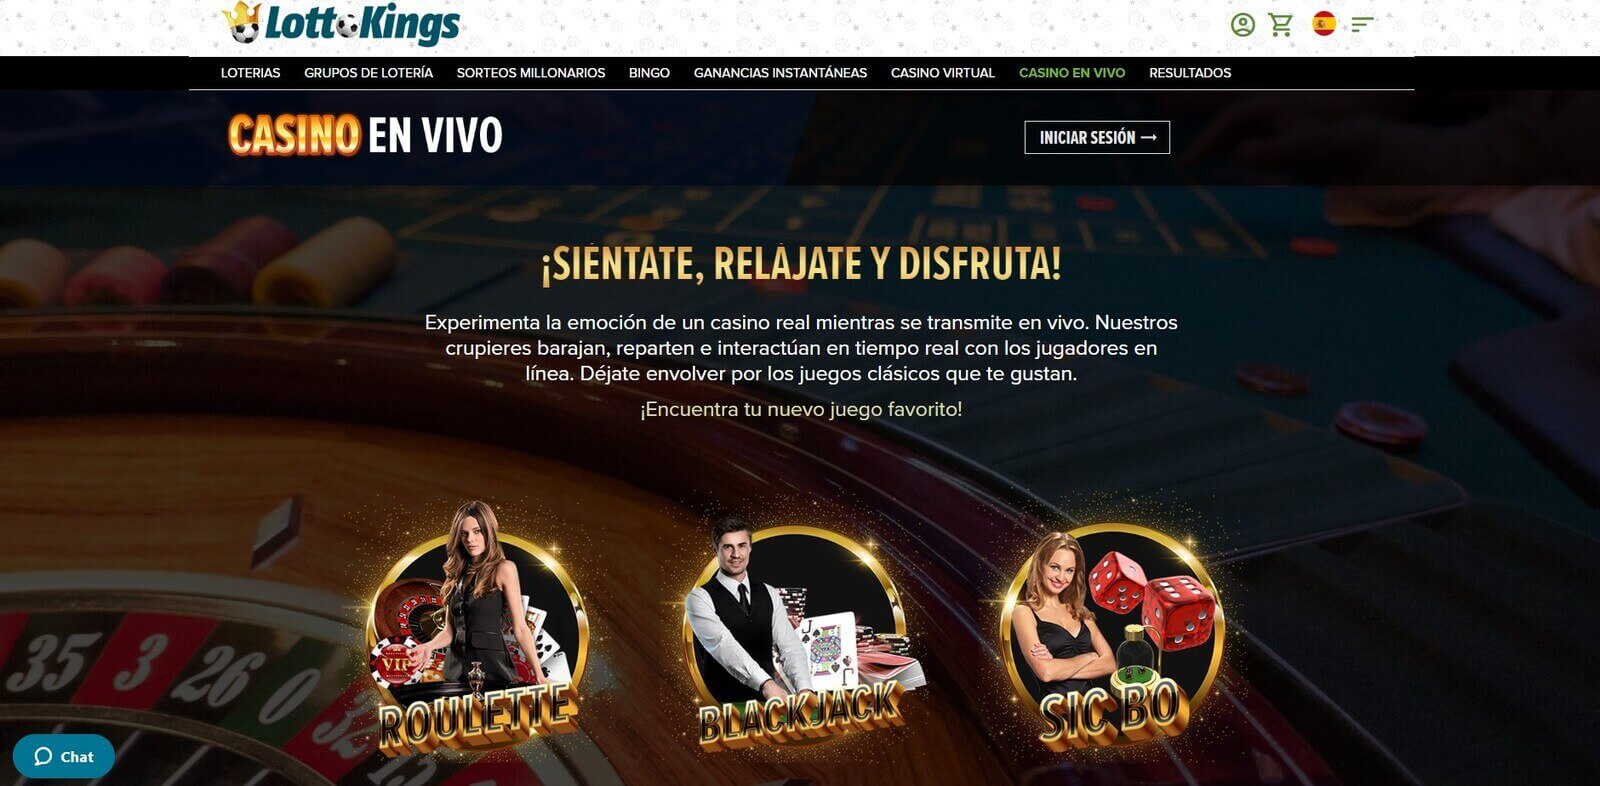 LottoKings Casino online en vivo en Latinoamérica